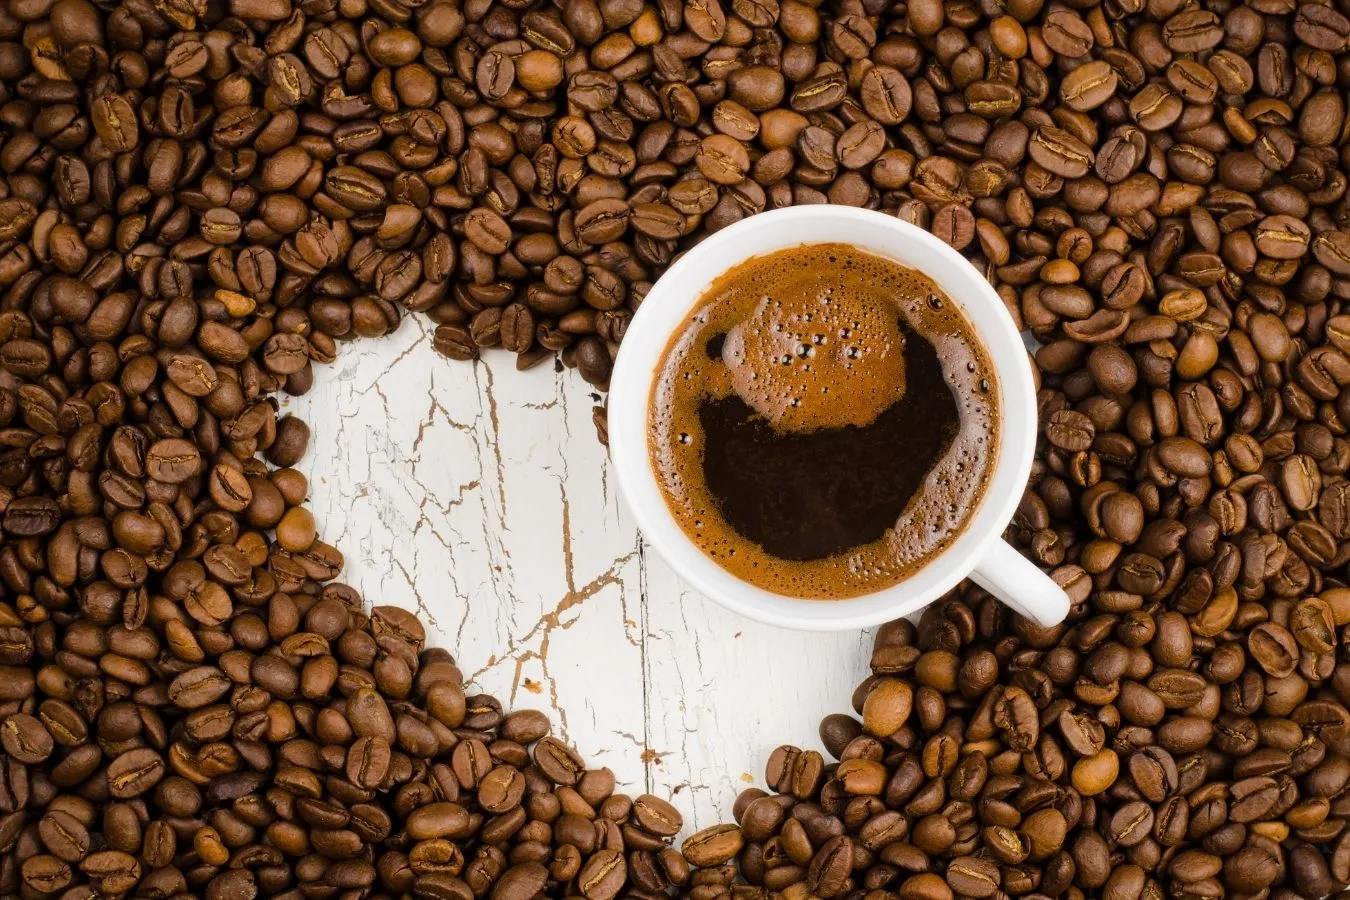 “Indigenous Coffee” Or “Single-Origin Coffee”